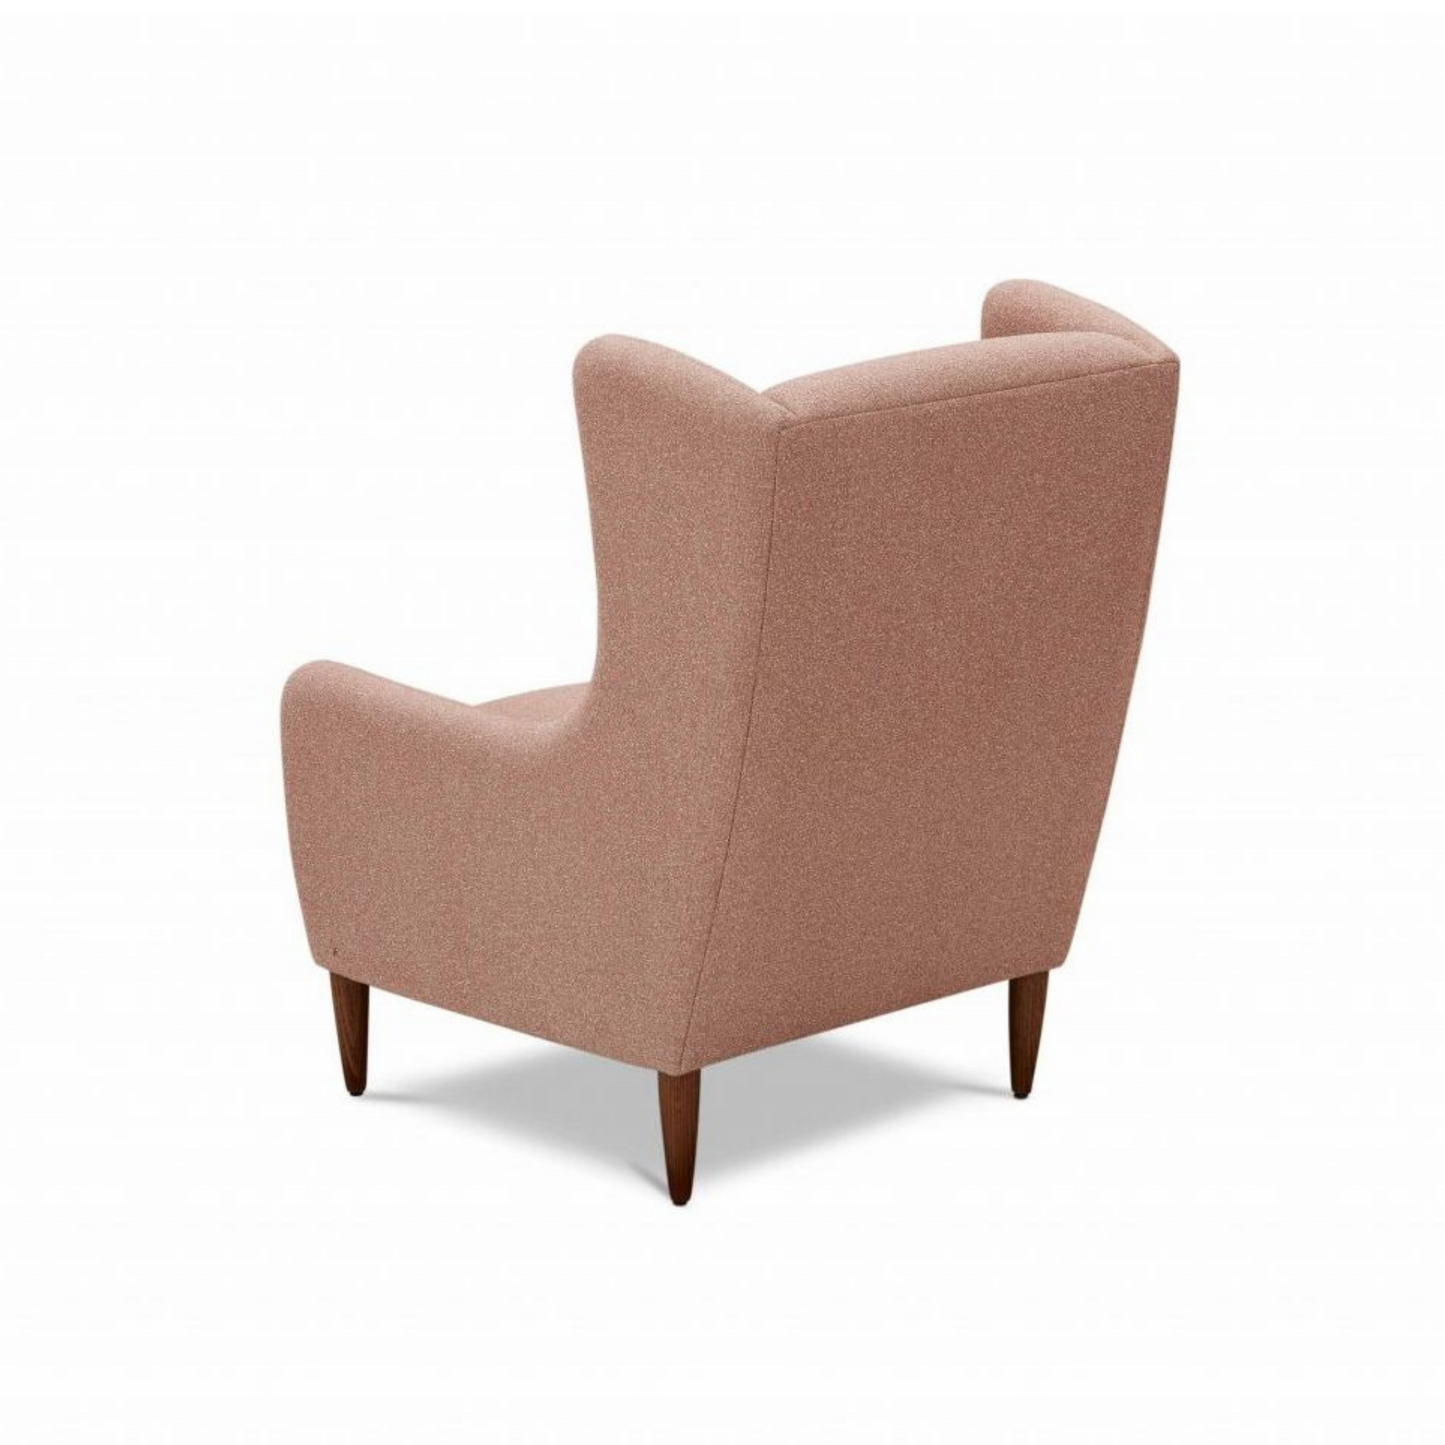 Heaton Chair by Molmic